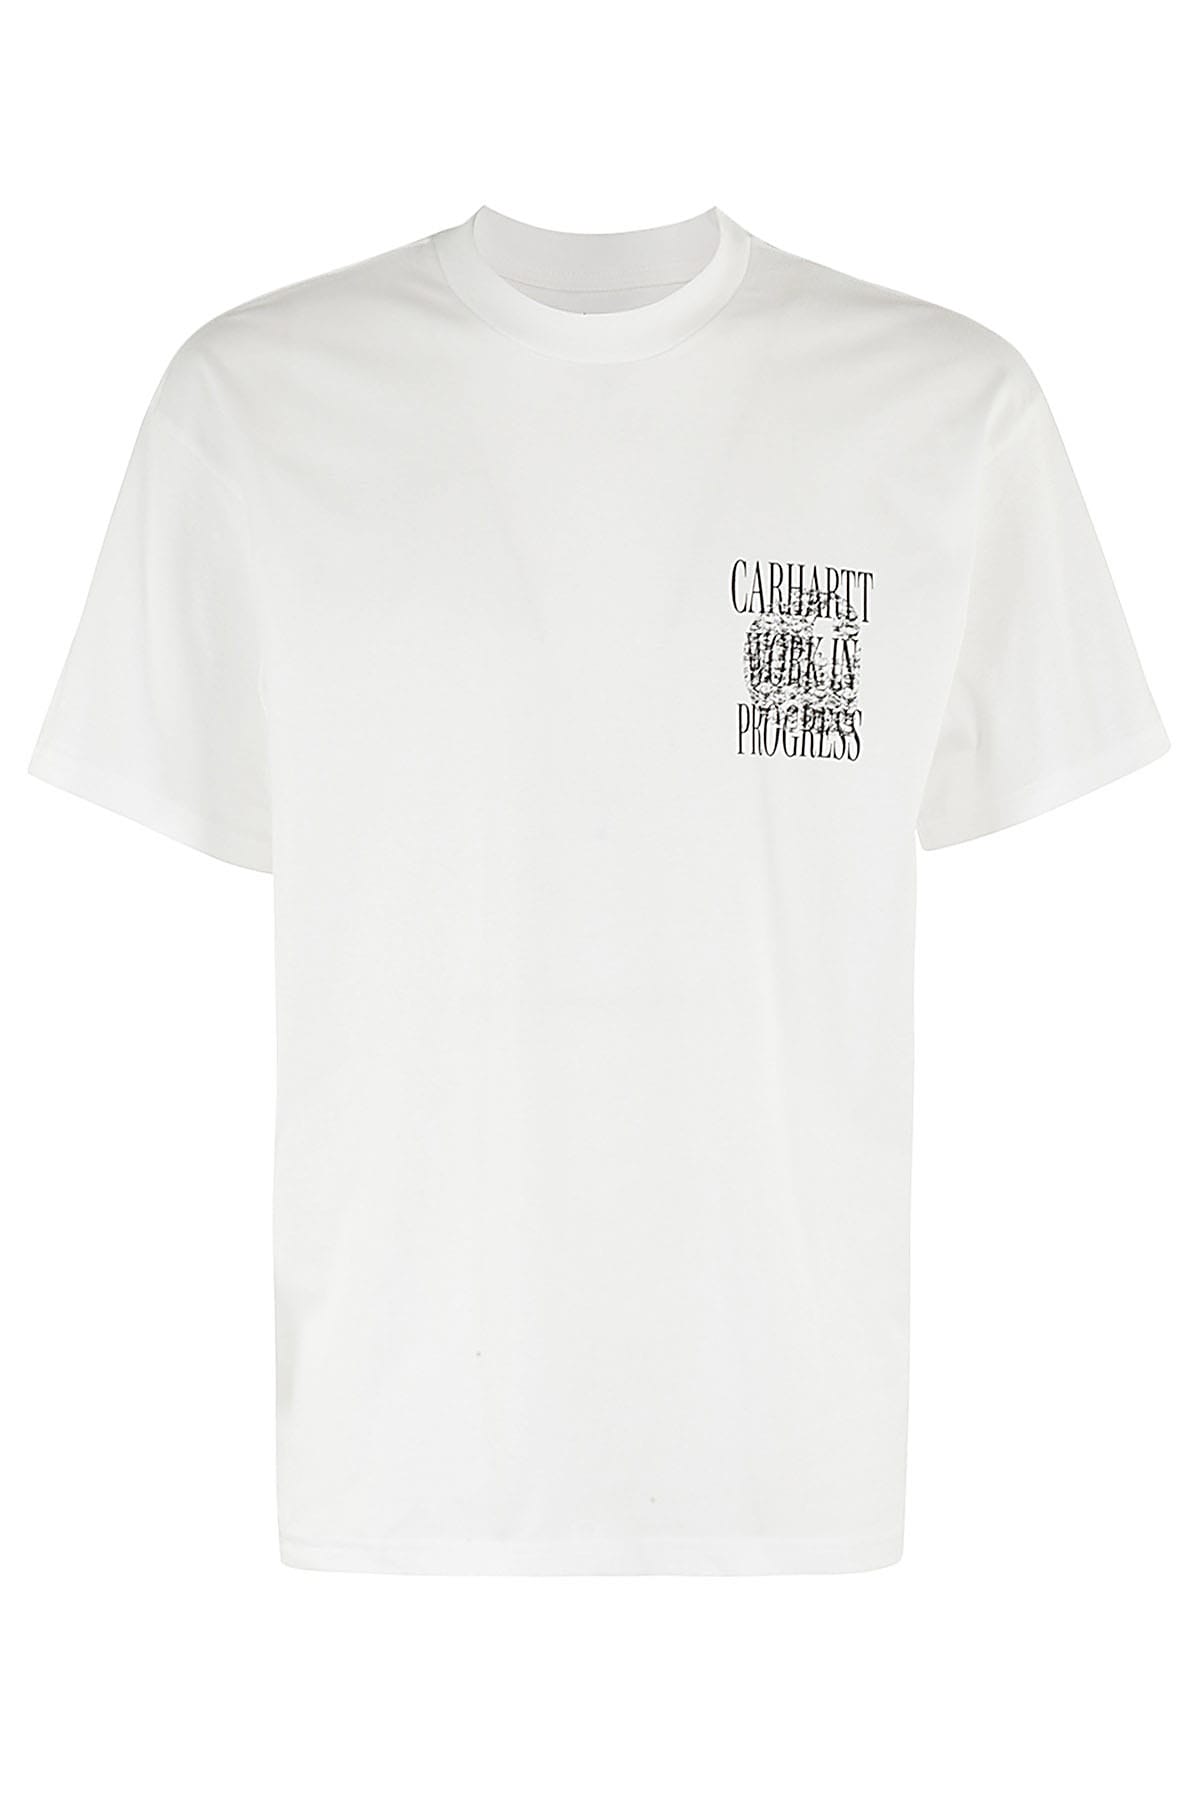 Carhartt Ss Always In White